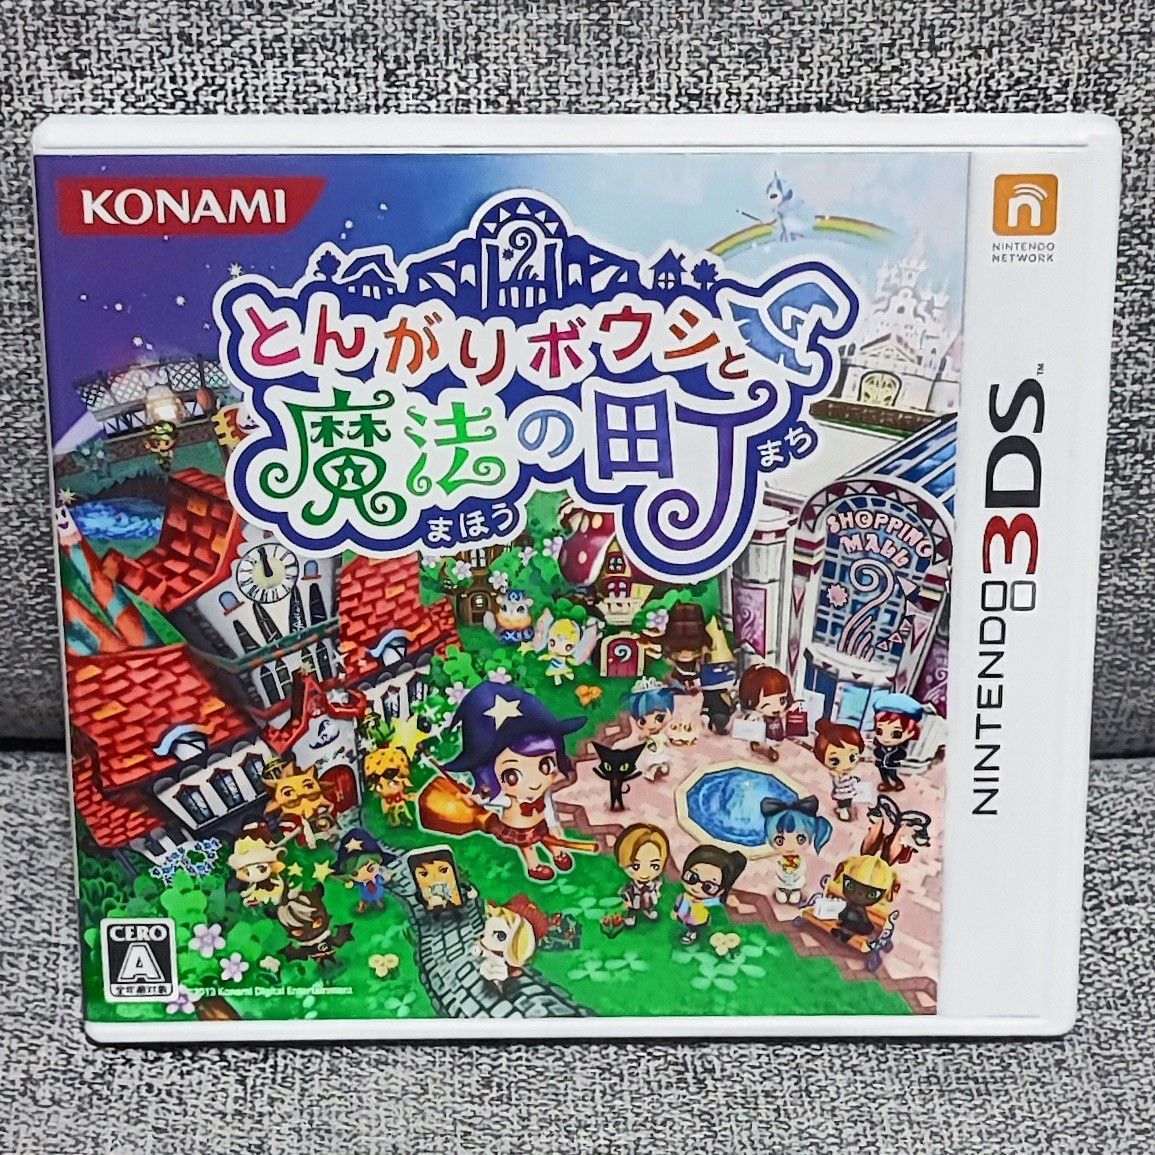 3DS とんがりボウシと魔法の町 ニンテンドー3DS 任天堂 KONAMI コナミ シュミレーション 魔法使い アドベンチャー